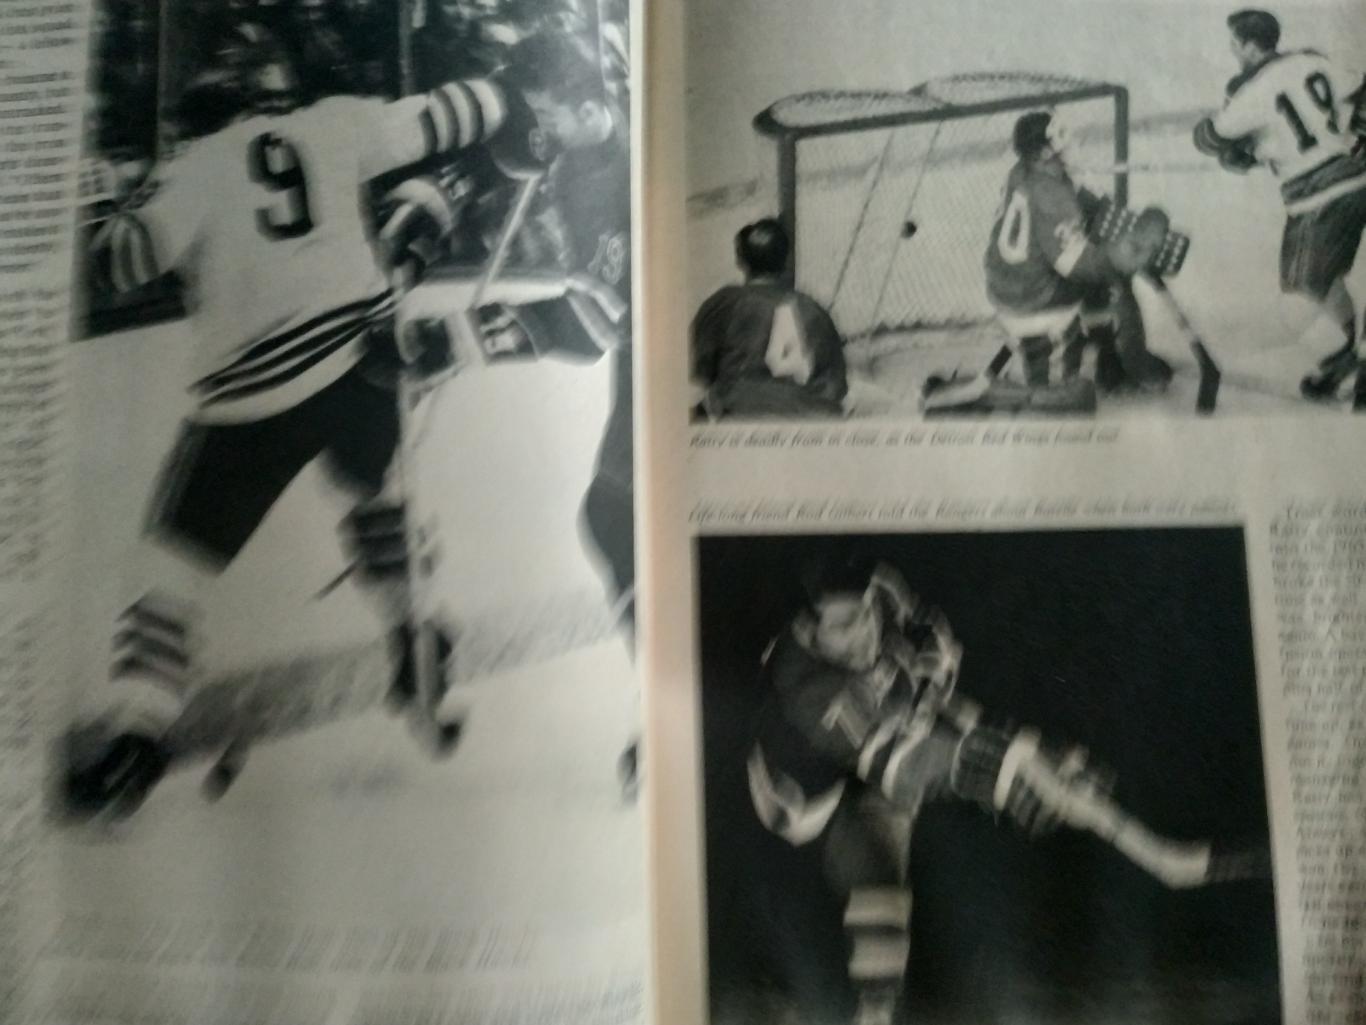 ЖУРНАЛ НХЛ СПОРТ СПЕШИАЛ ХОККЕЙ FEB 1973 NHL SPORTS SPECIAL HOCKEY 6